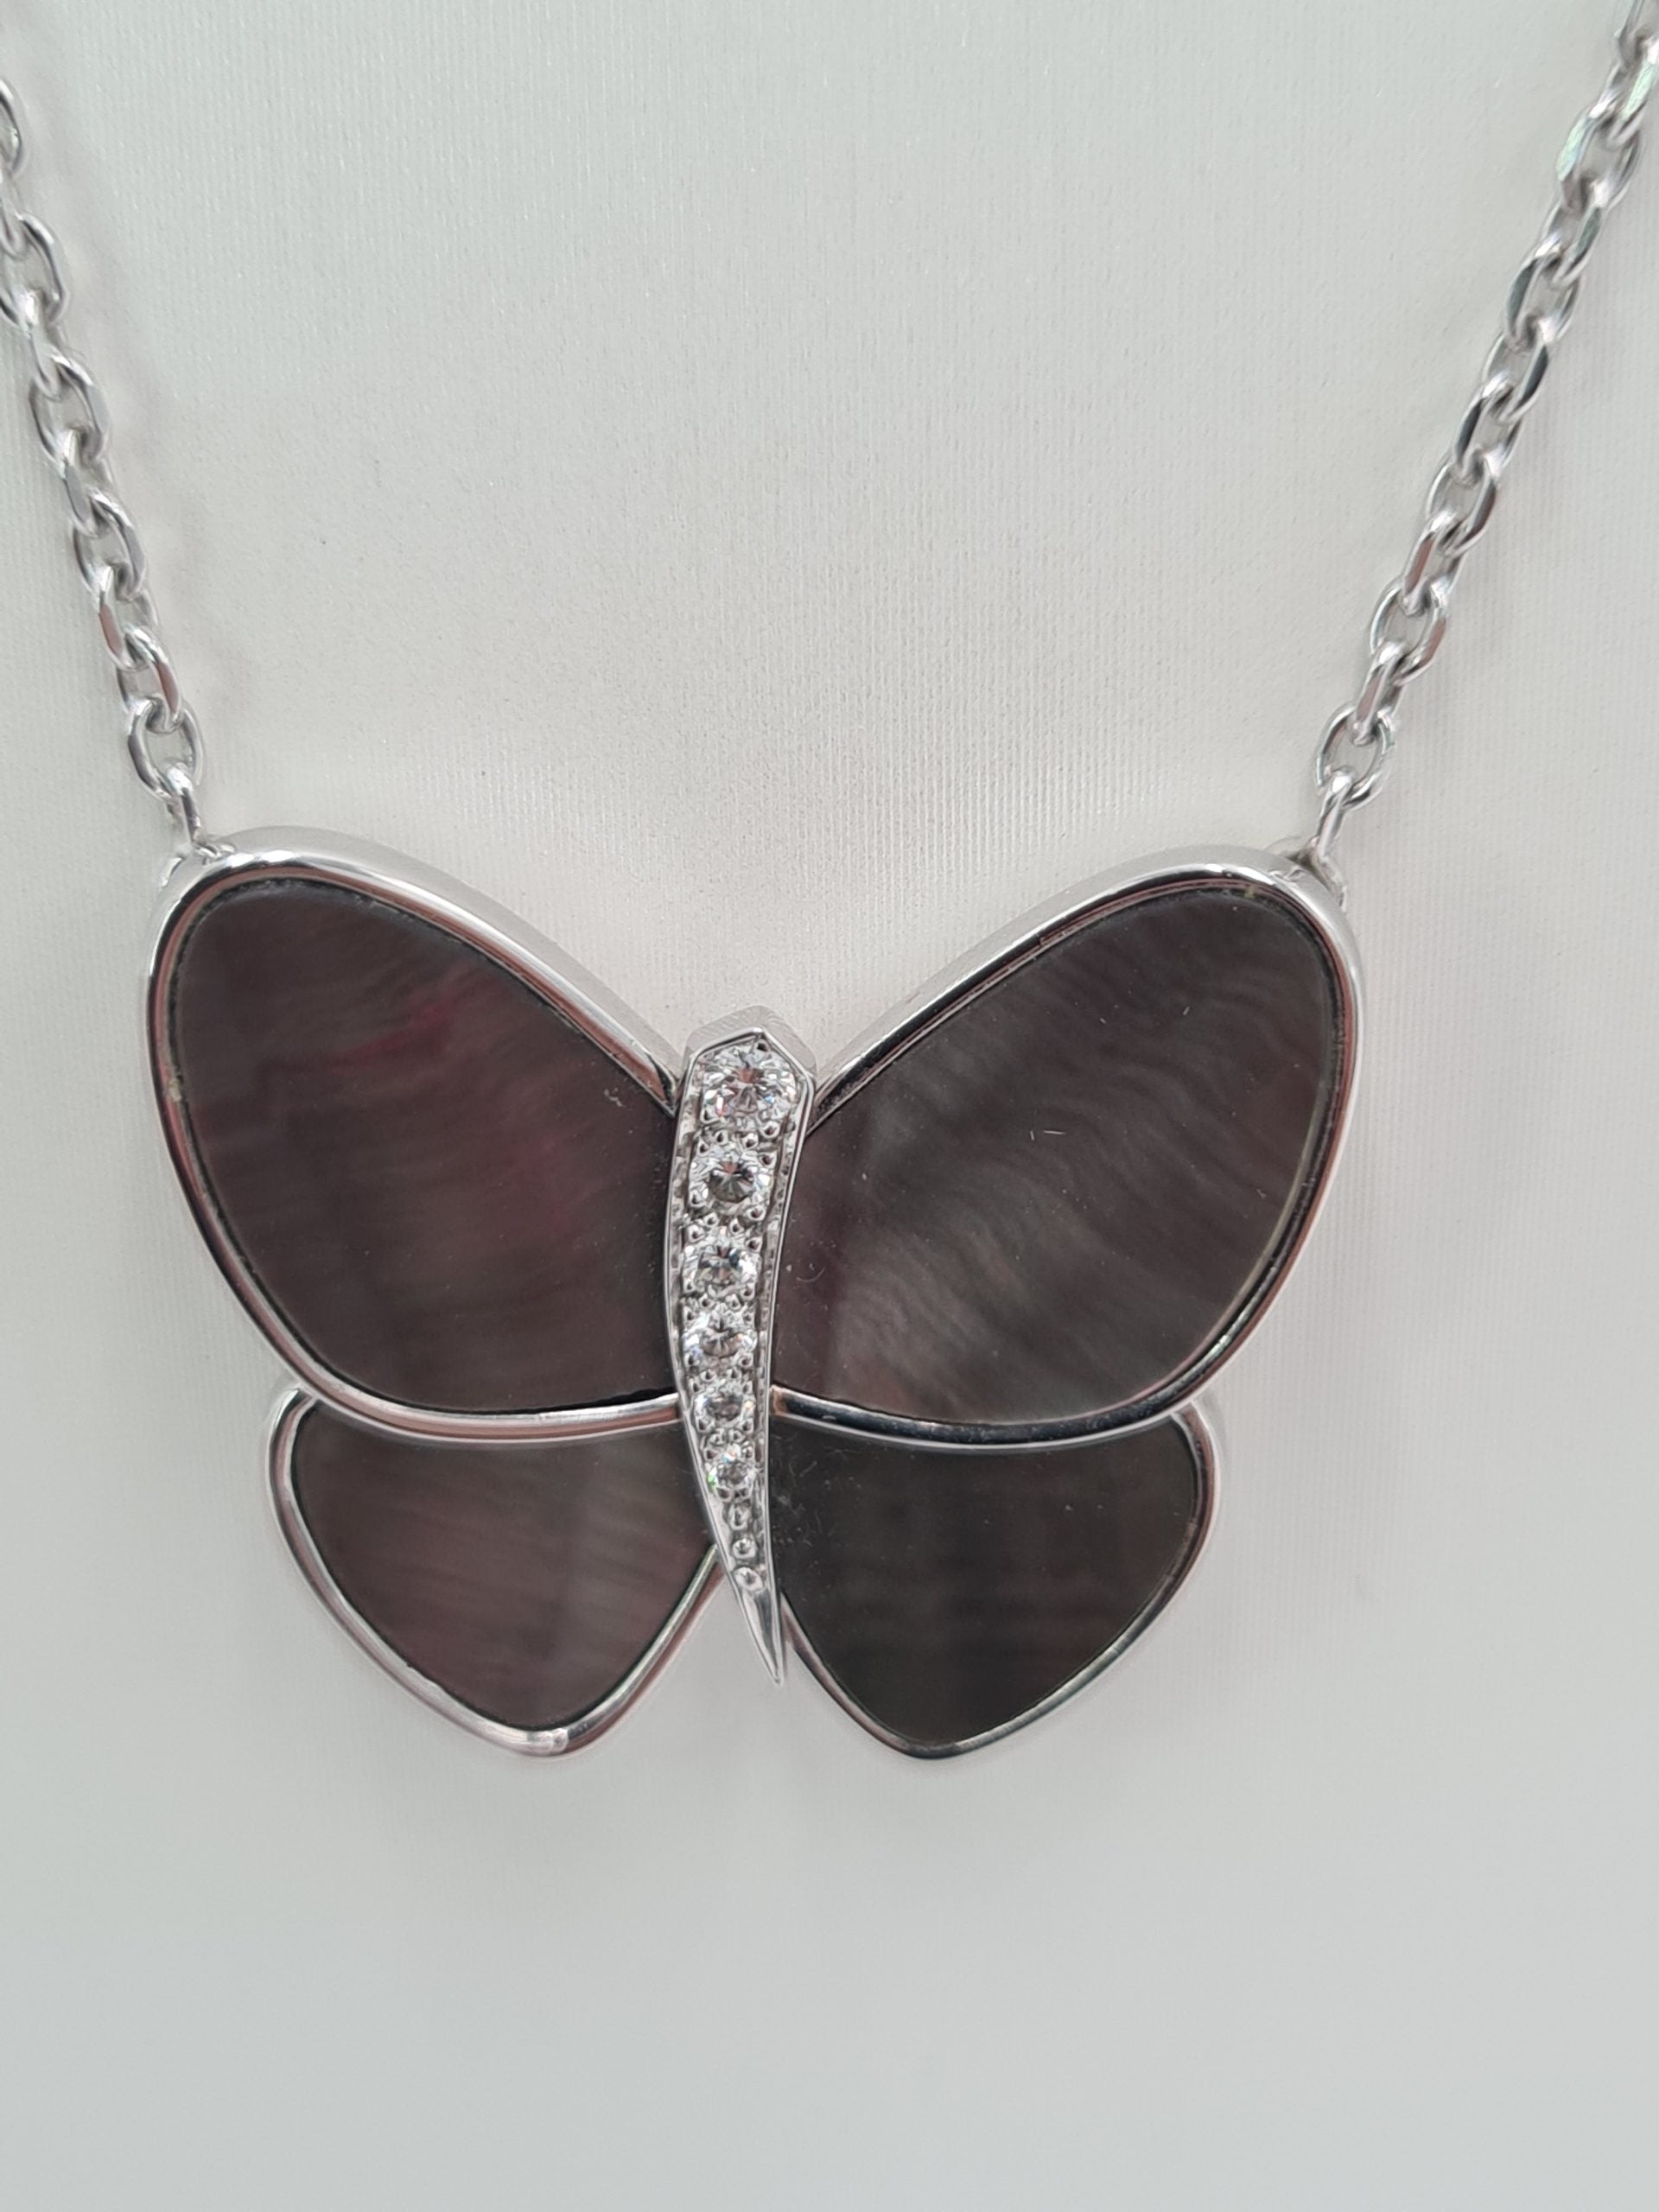 Van Cleef & Arpels Two Butterfly Diamond Necklace | eBay